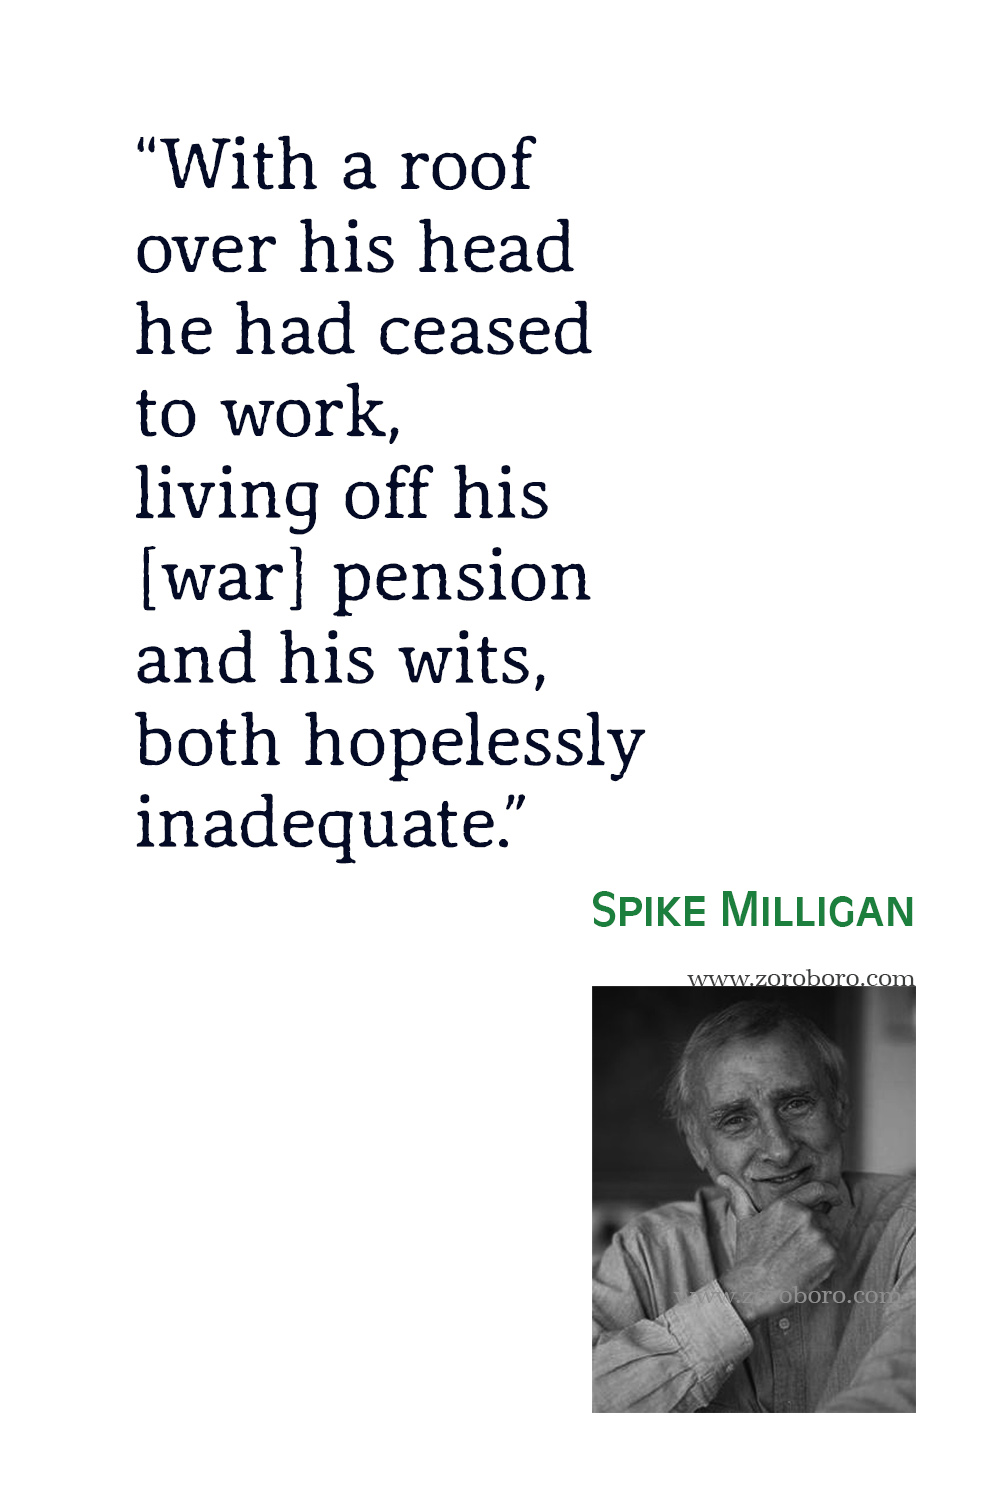 Spike Milligan Quotes, Spike Milligan Poems, Spike Milligan Funny Quotes, Spike Milligan Poetry, Spike Milligan.